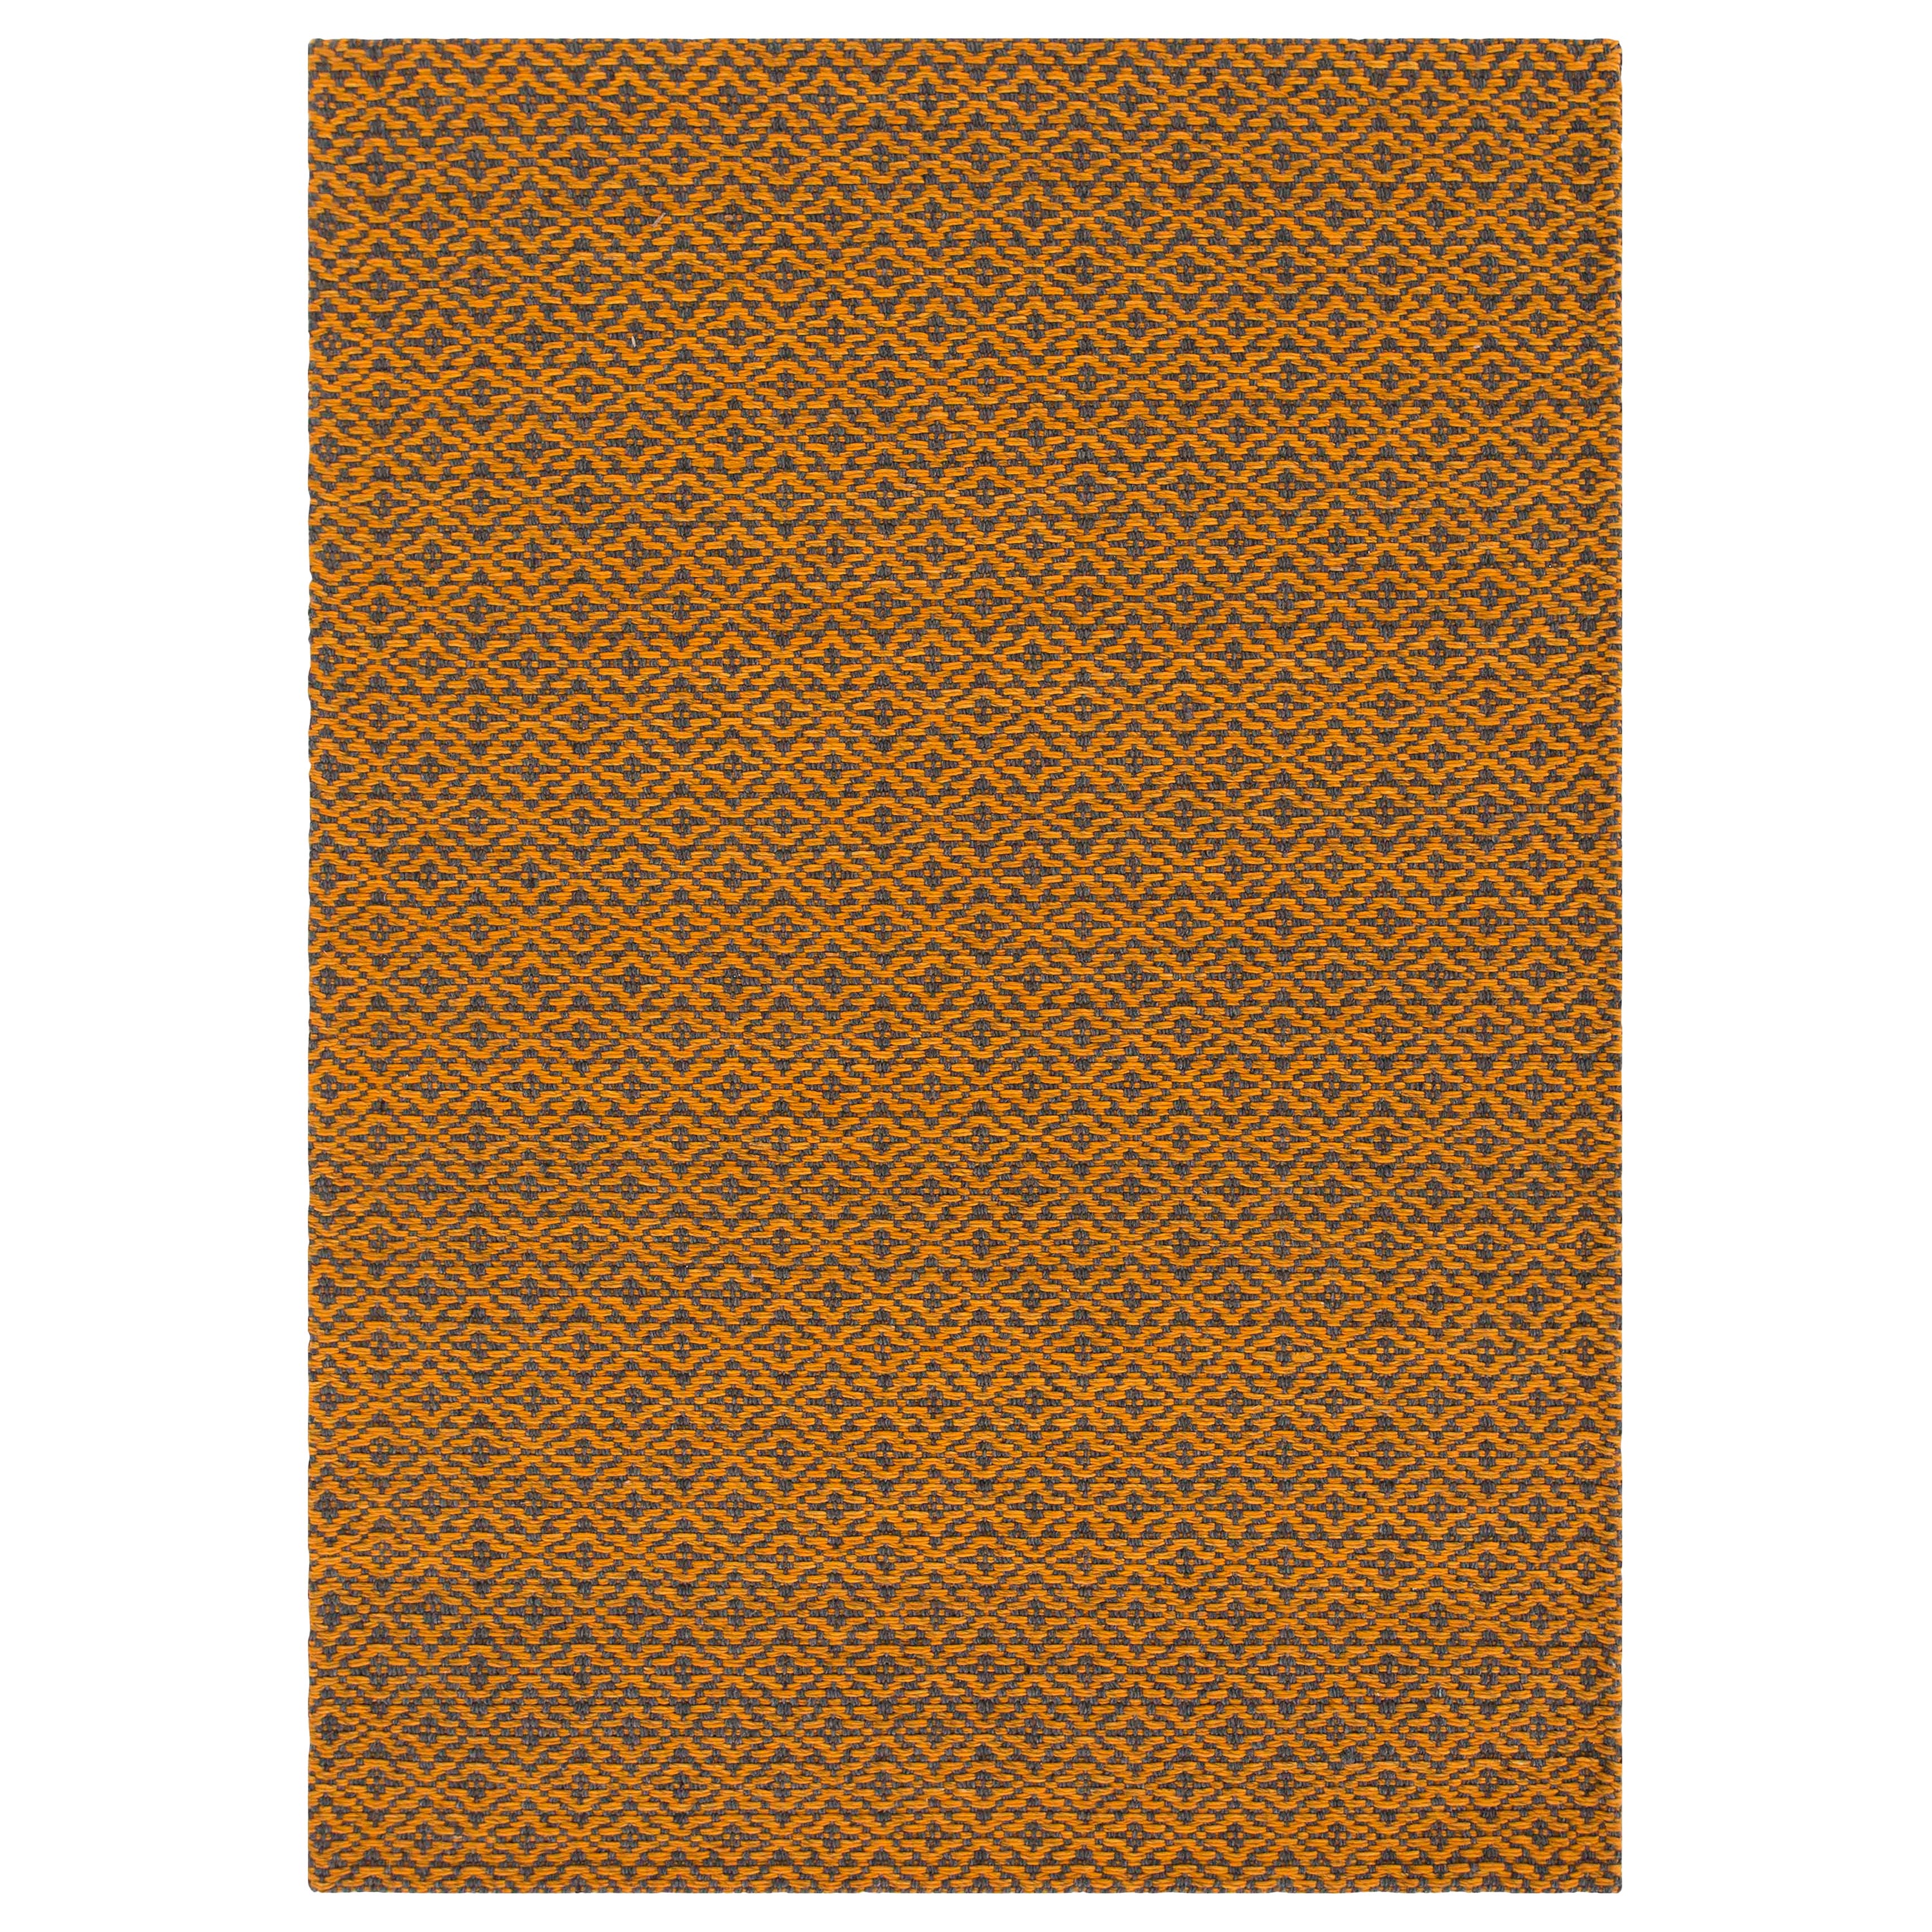 Bari Large Wool Rug in Orange by GAN